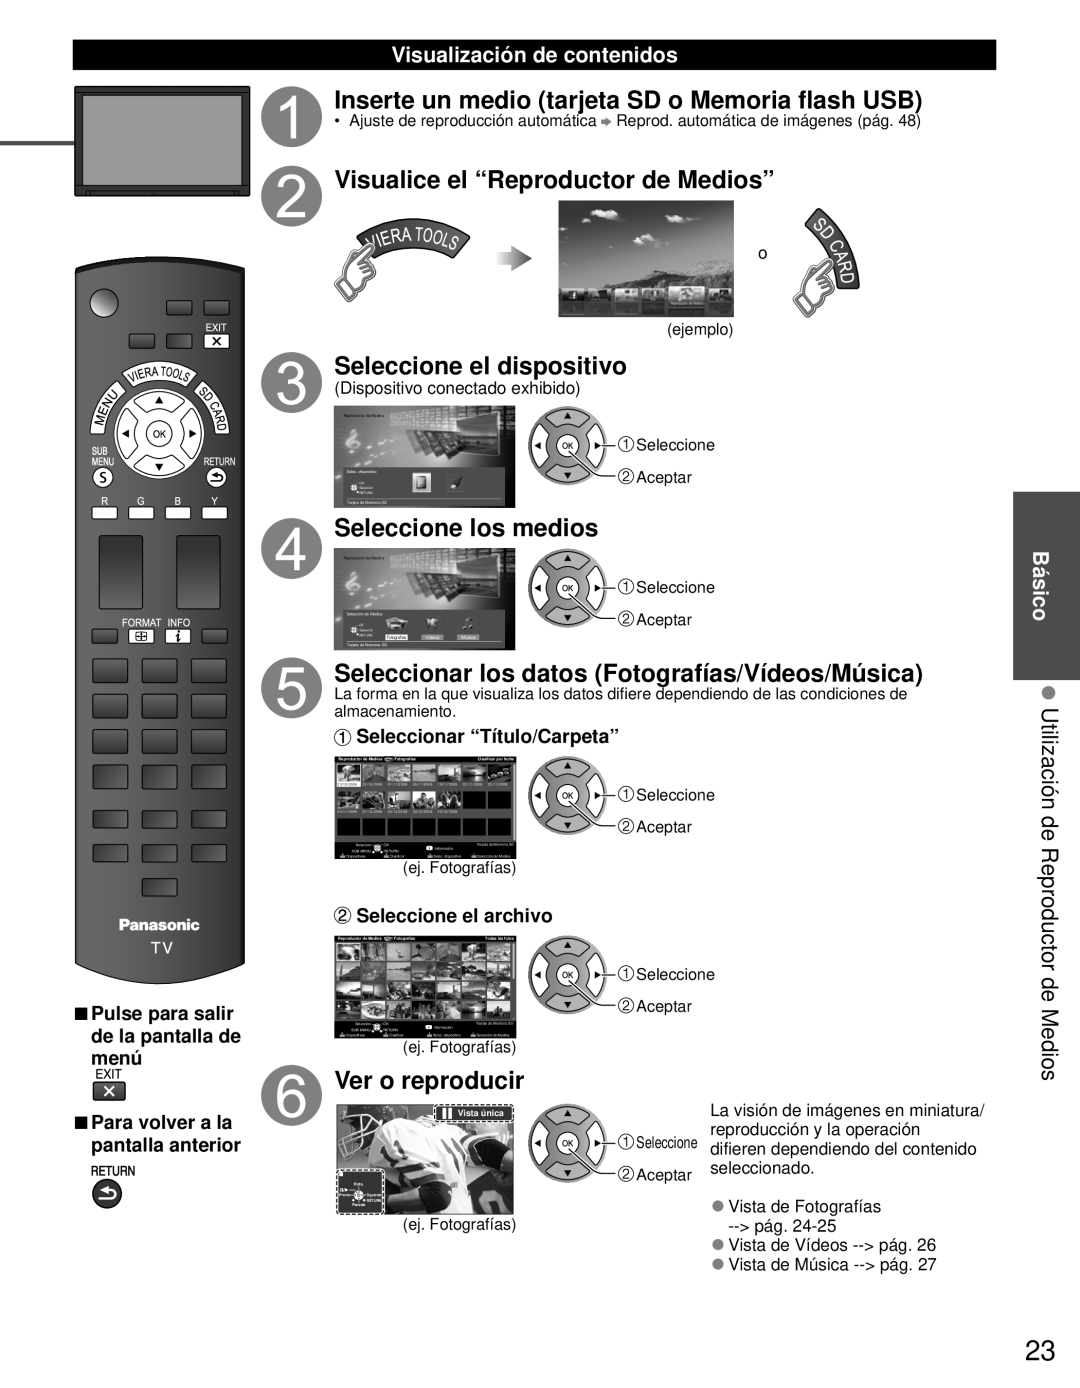 Panasonic TC-L42E3 Inserte un medio tarjeta SD o Memoria flash USB, Visualice el “Reproductor de Medios”, Ver o reproducir 